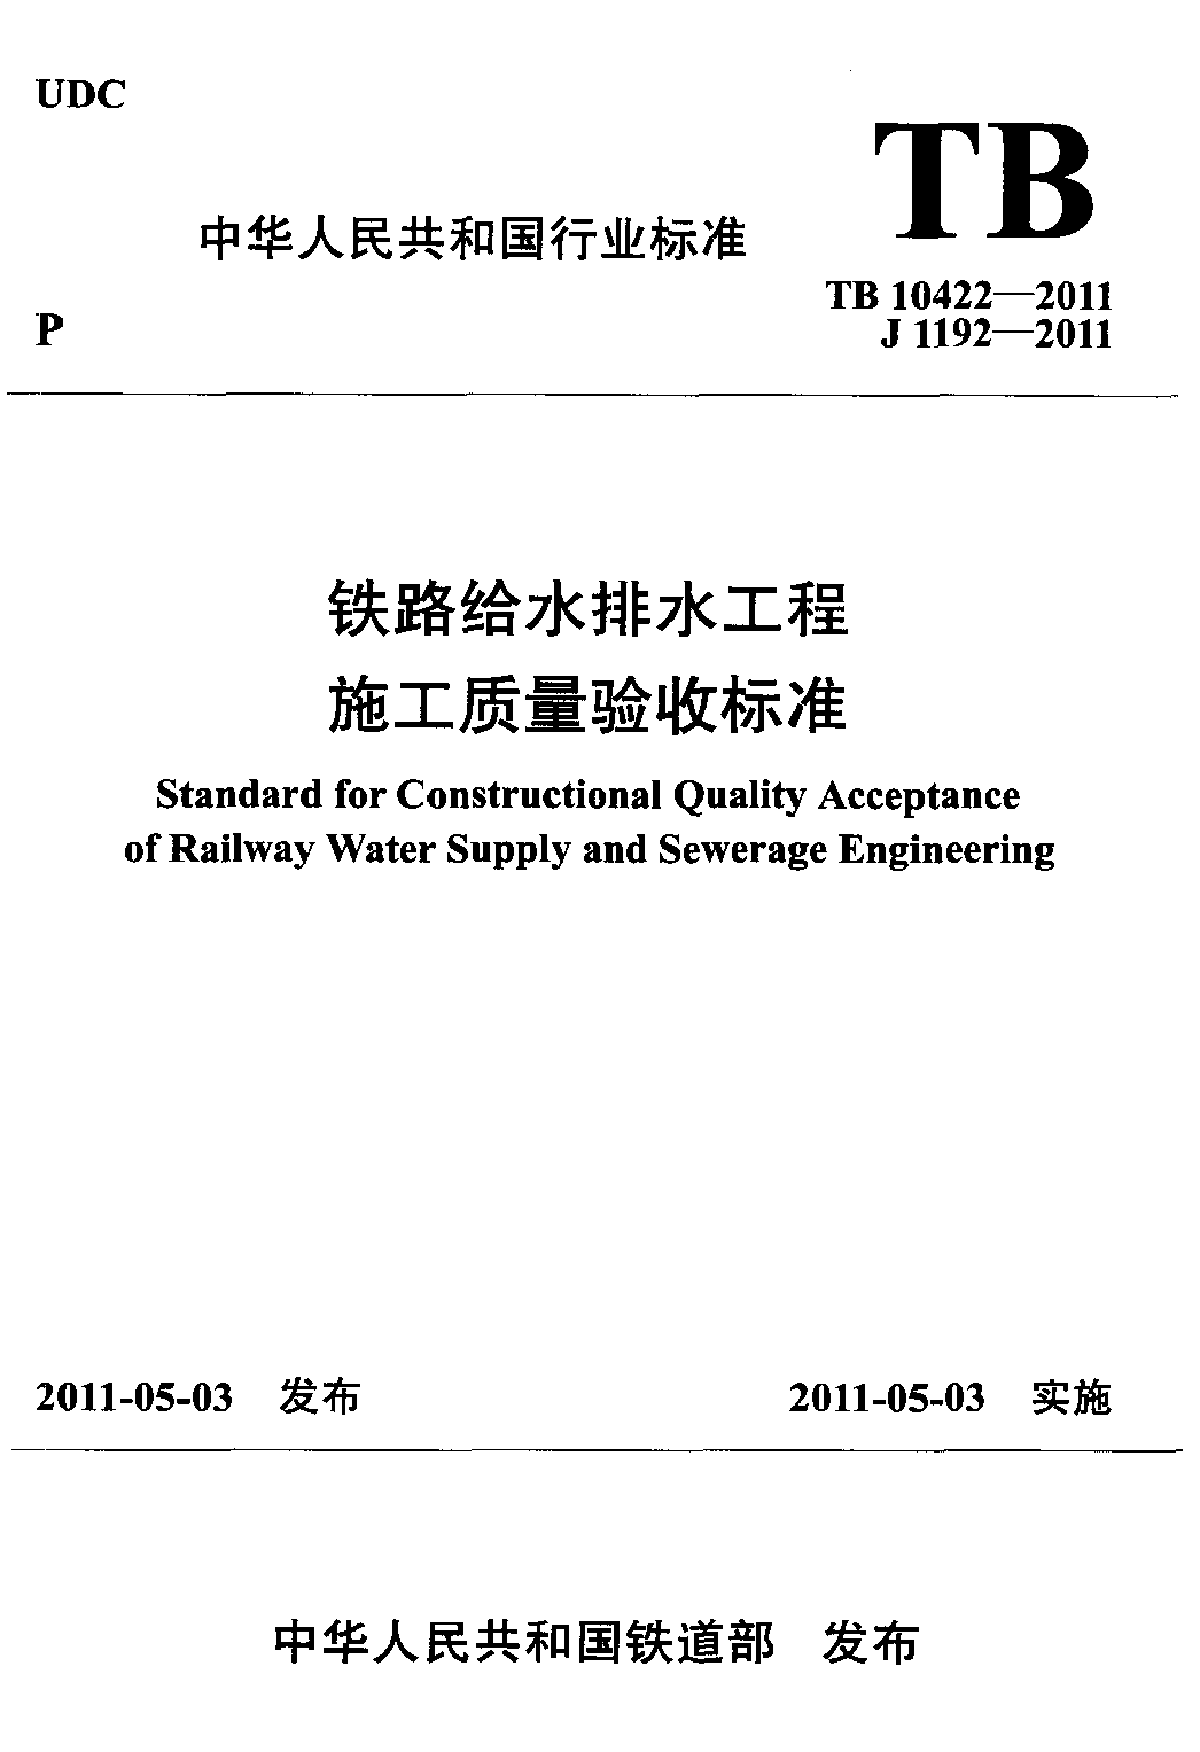 TB 10422-2011 铁路给水排水工程施工质量验收标准